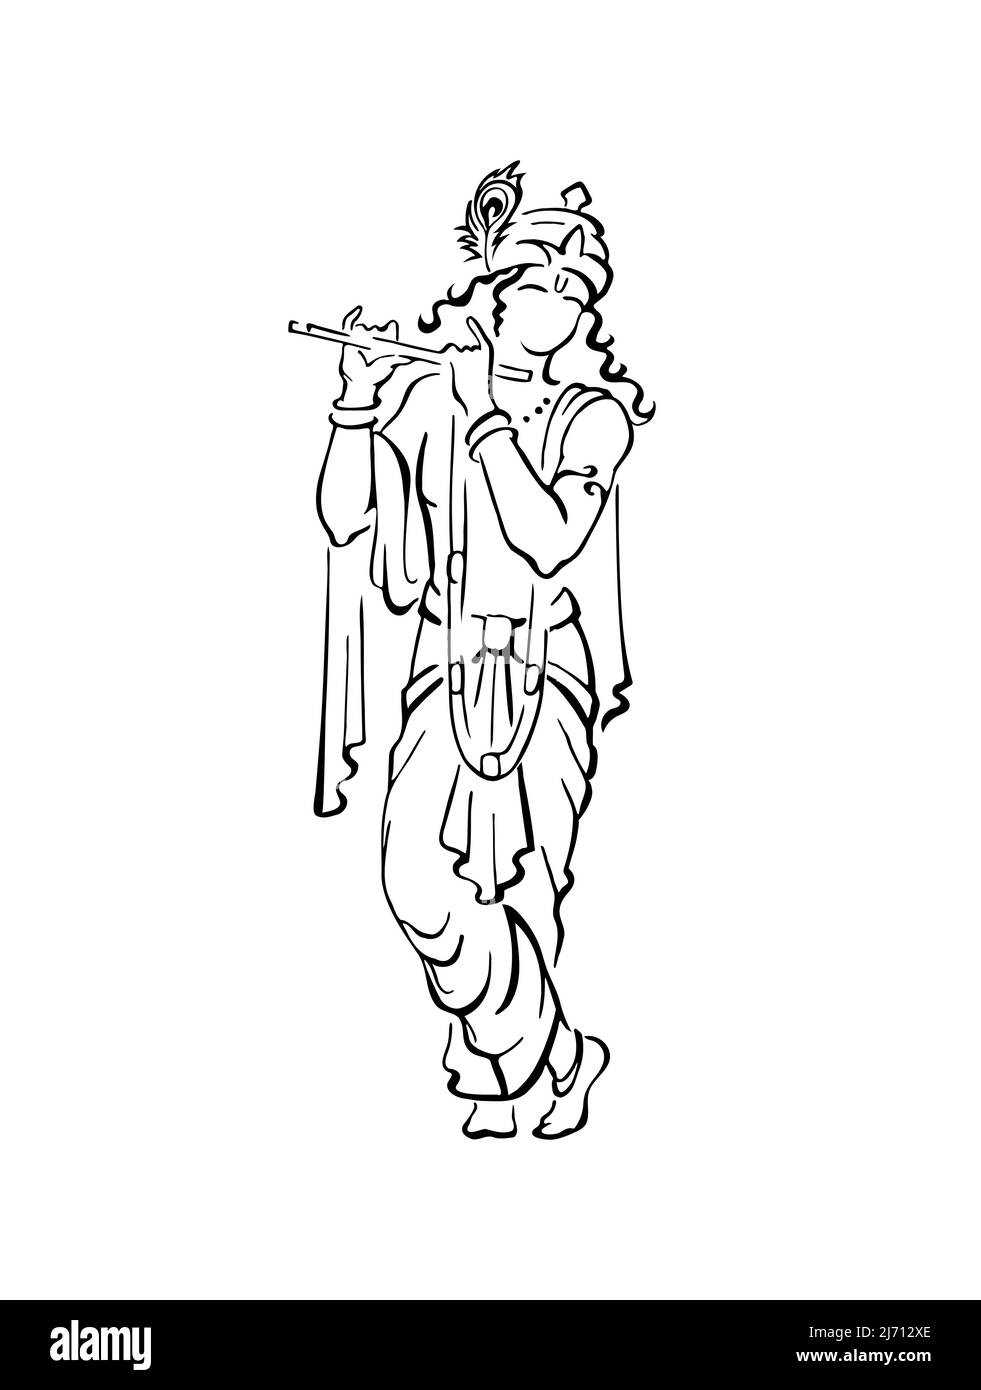 God Krishna Beautiful Young Man Playing Flute Black Line Drawing Stock  Illustration by ©k.9.natali.mail.ru #394586124